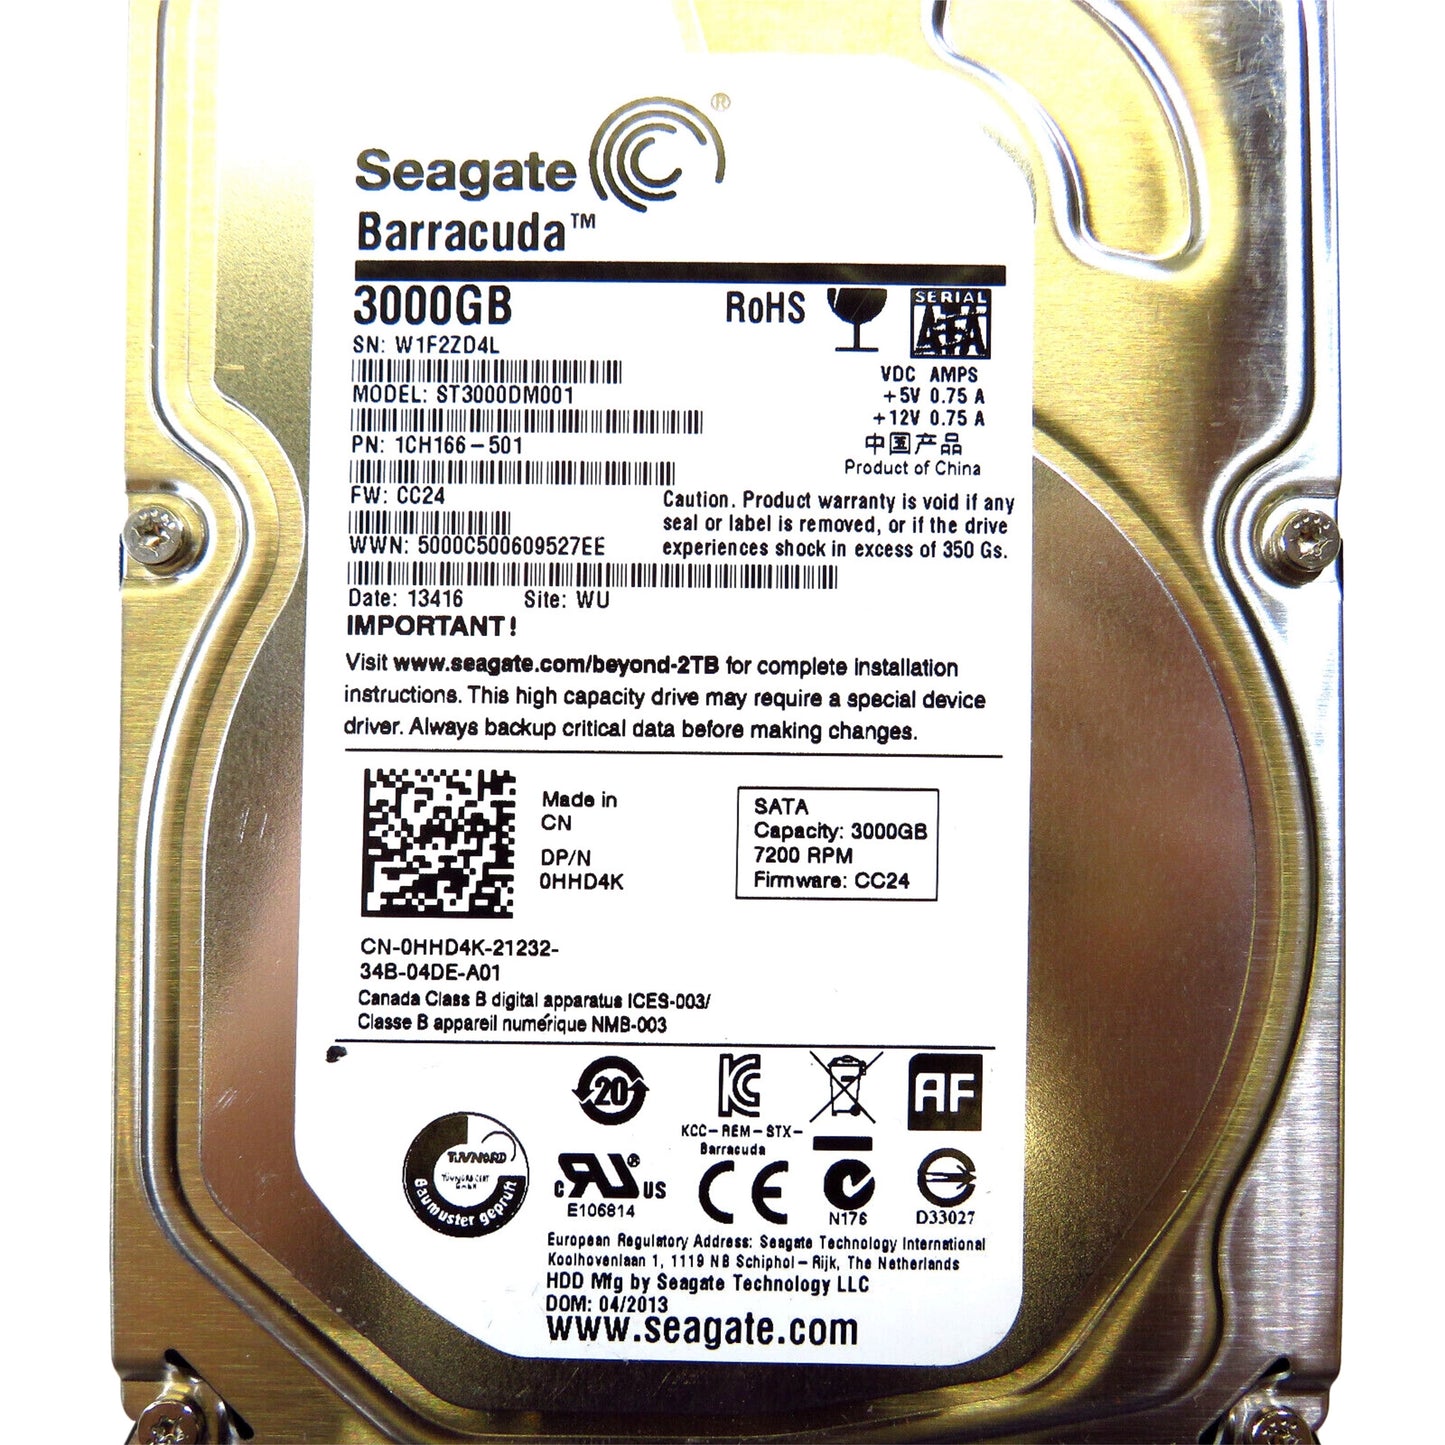 Dell HHD4K 3.5" 3TB 7200RPM SATA III Hard Disk Drive (HDD), Silver (Refurbished)